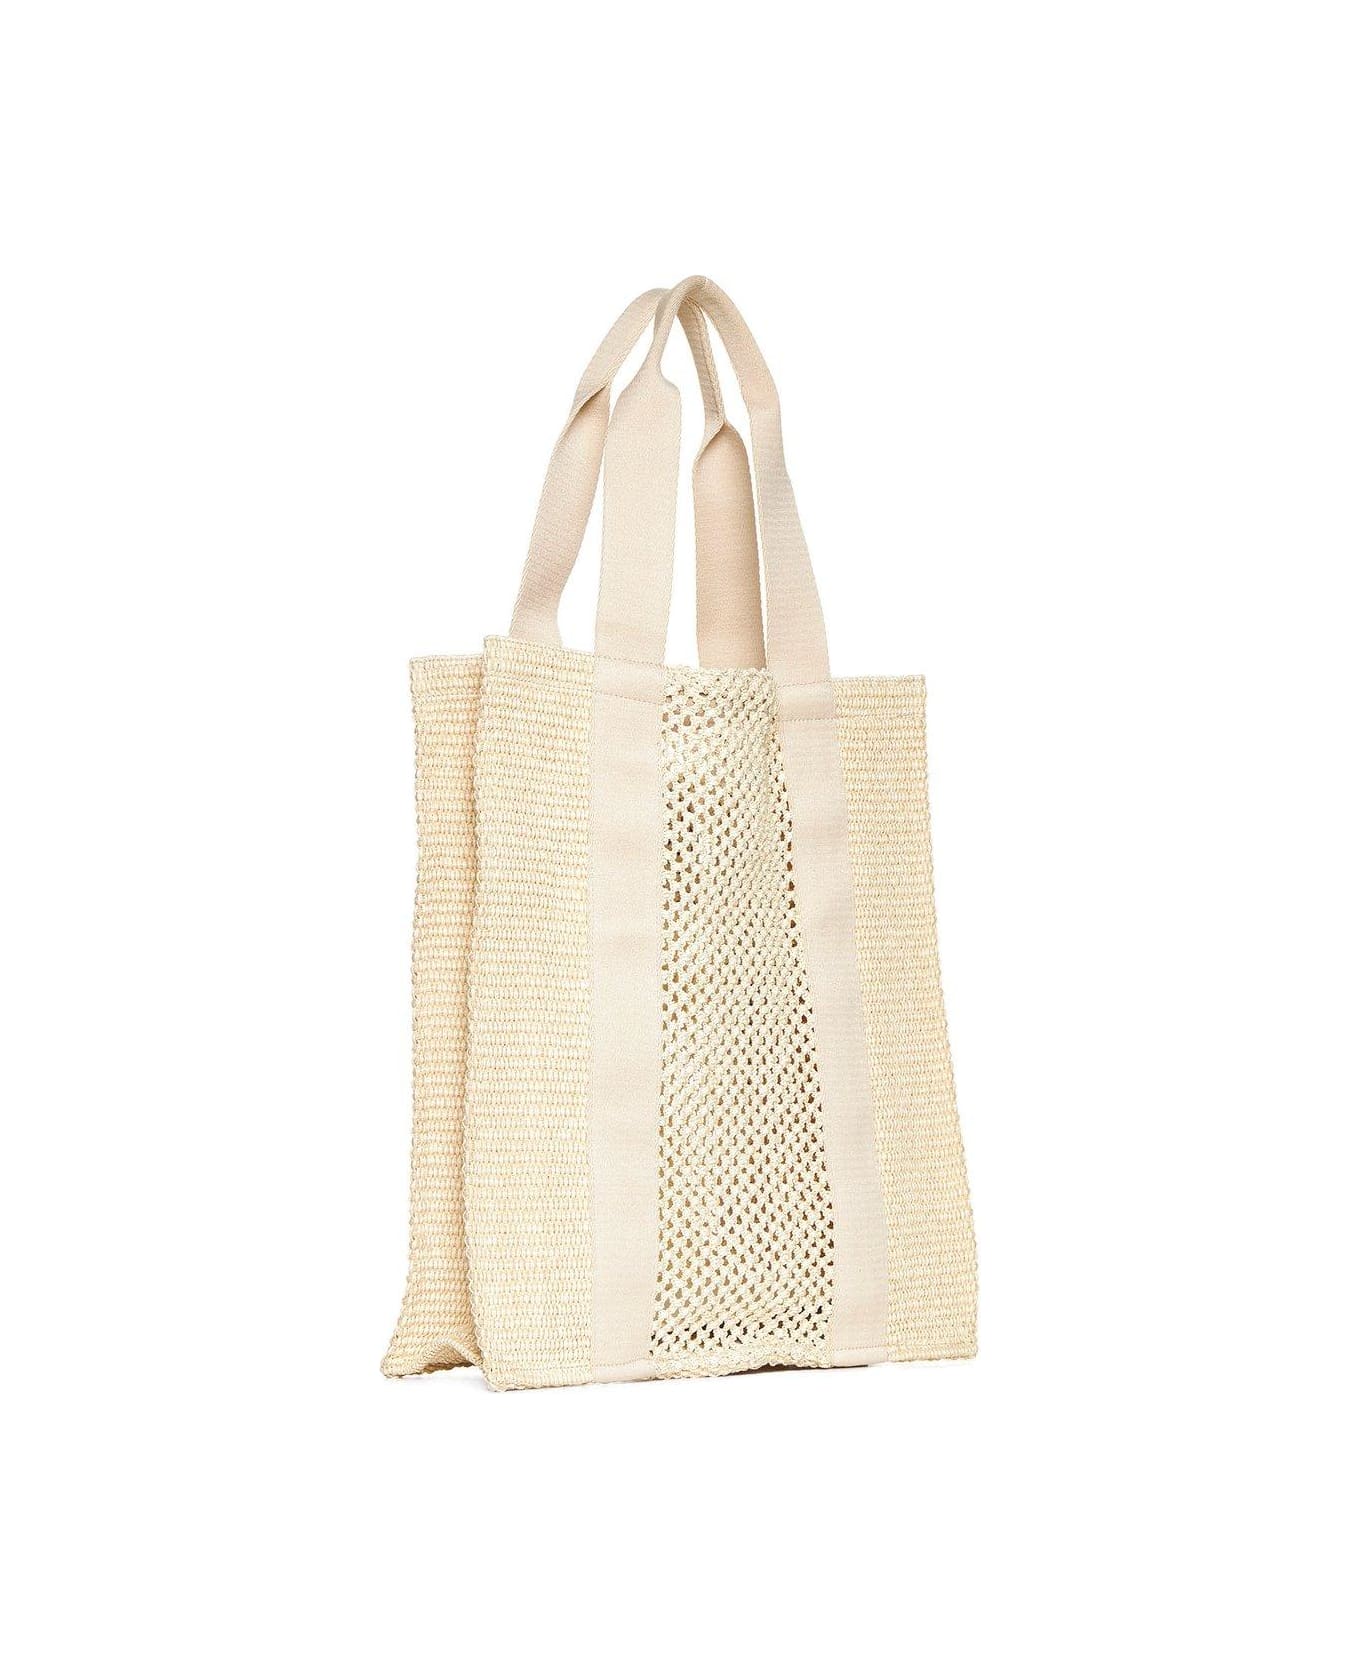 Isabel Marant Striped Woven Top Handle Bag - Beige/beige トートバッグ